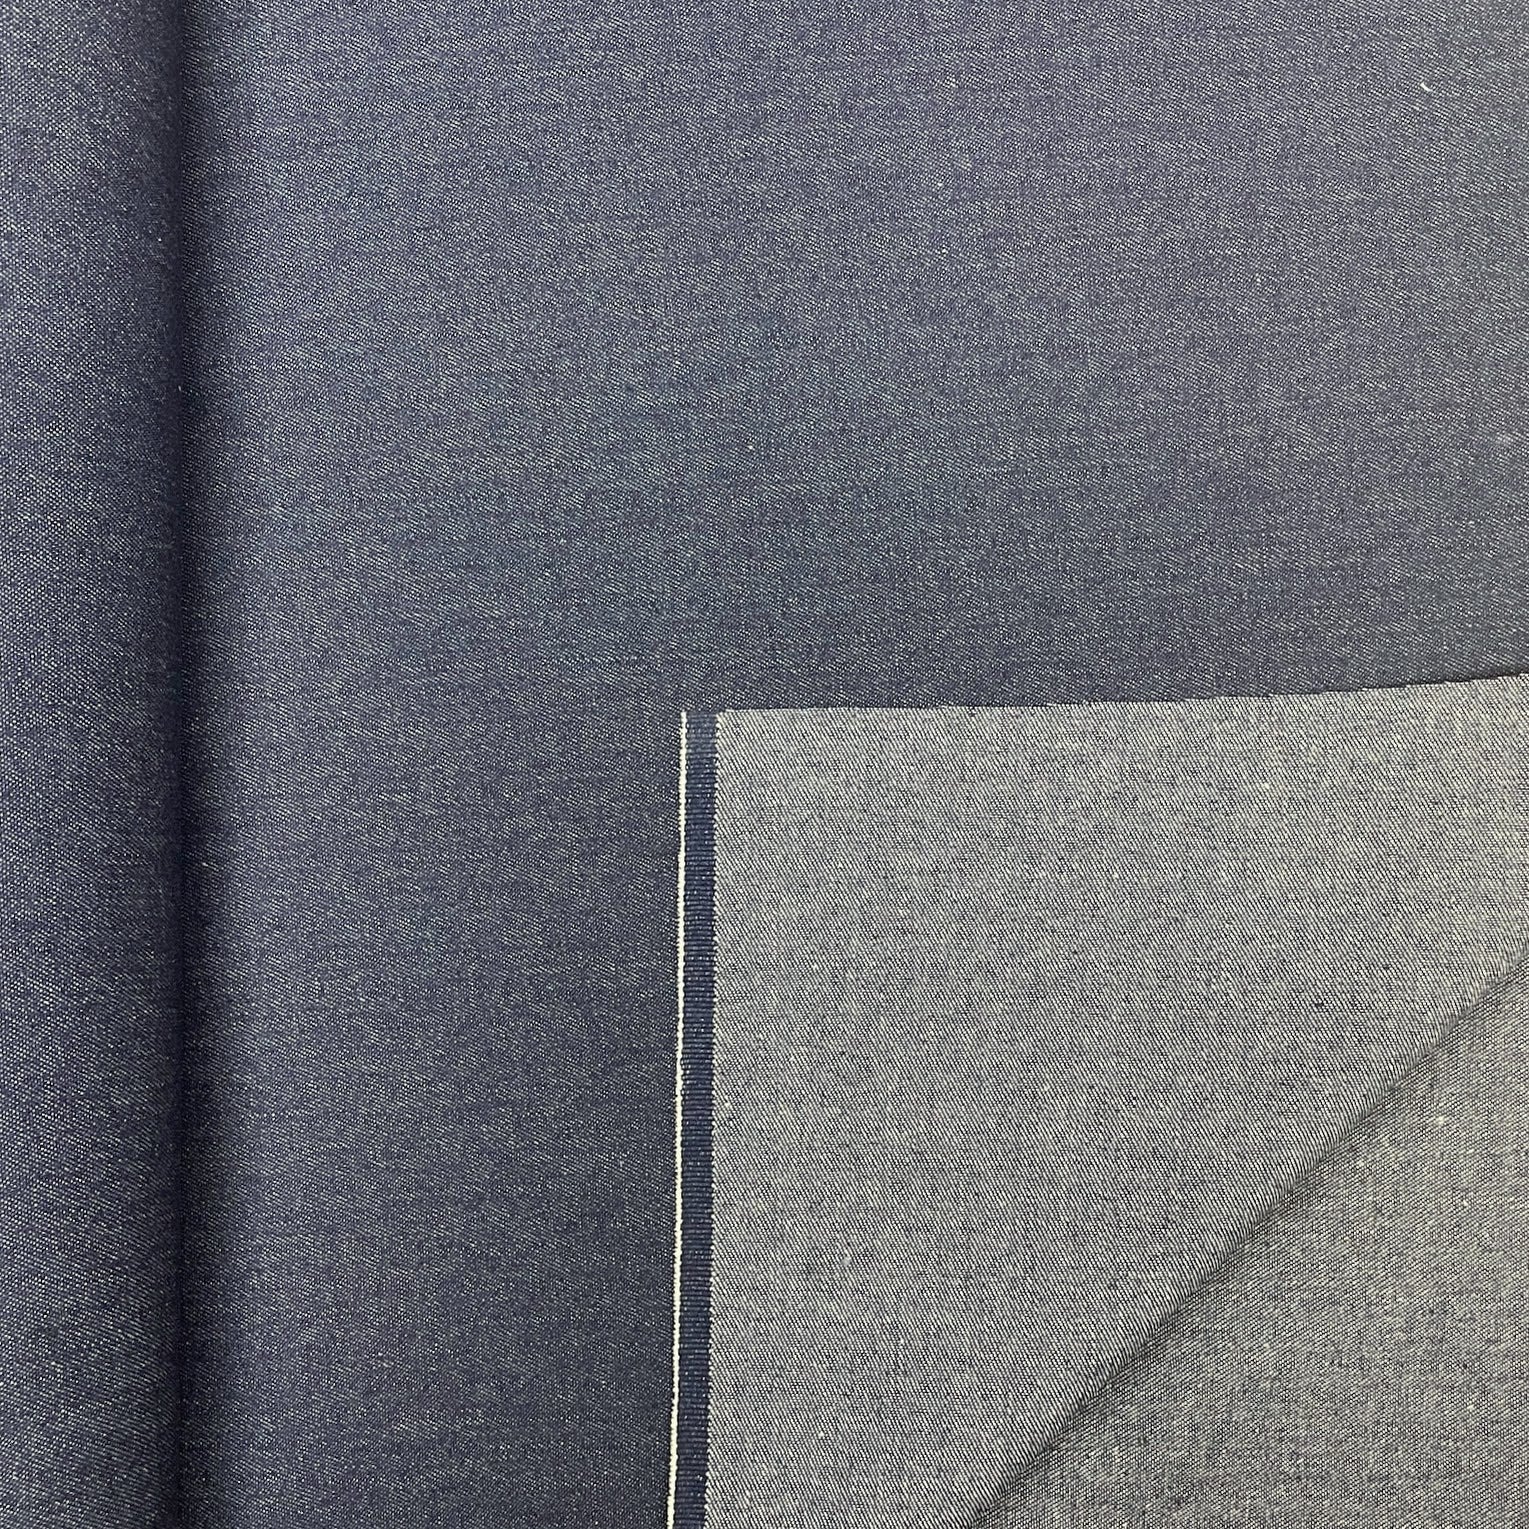 Denim Fabric for Apparel Home Decor 8 OZ Indigo Blue Washed MULTIPURPOSE  Medium Weight -  Canada